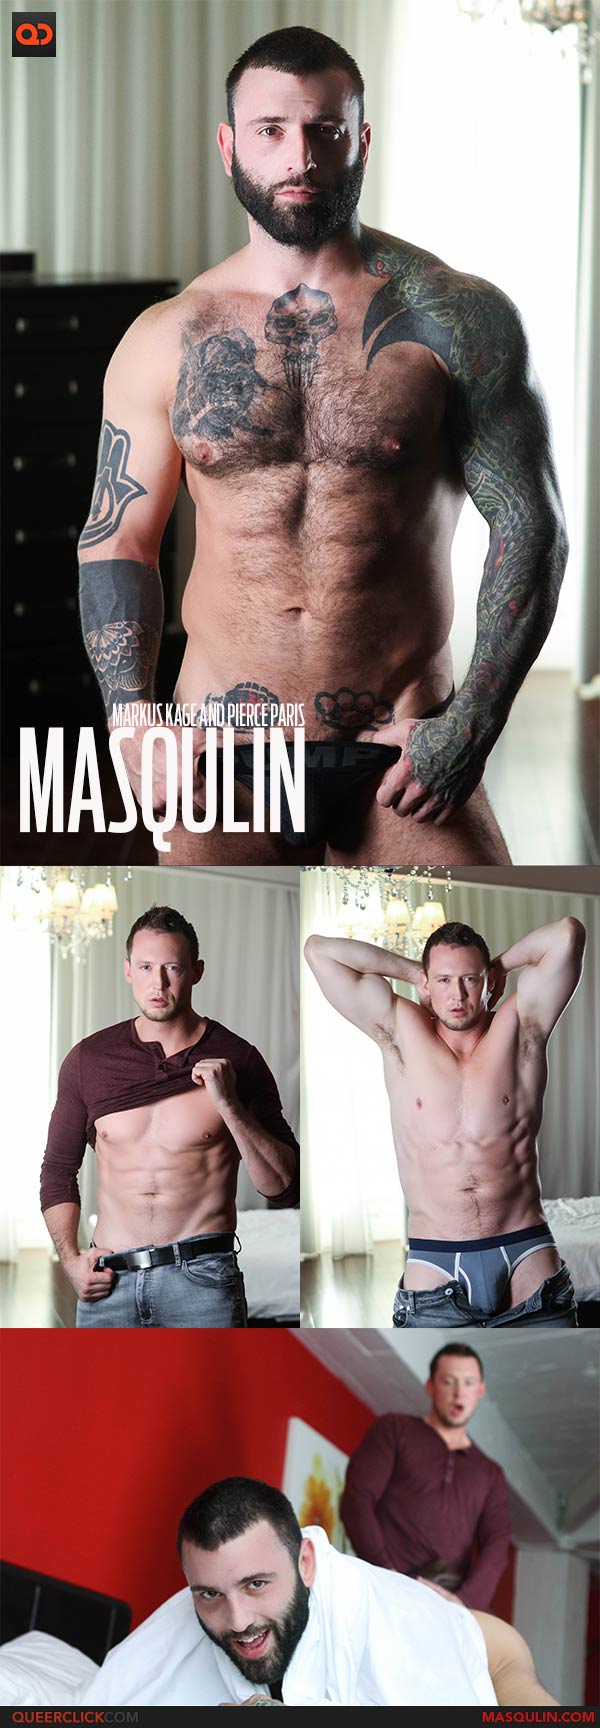 Masqulin: Markus Kage and Pierce Paris